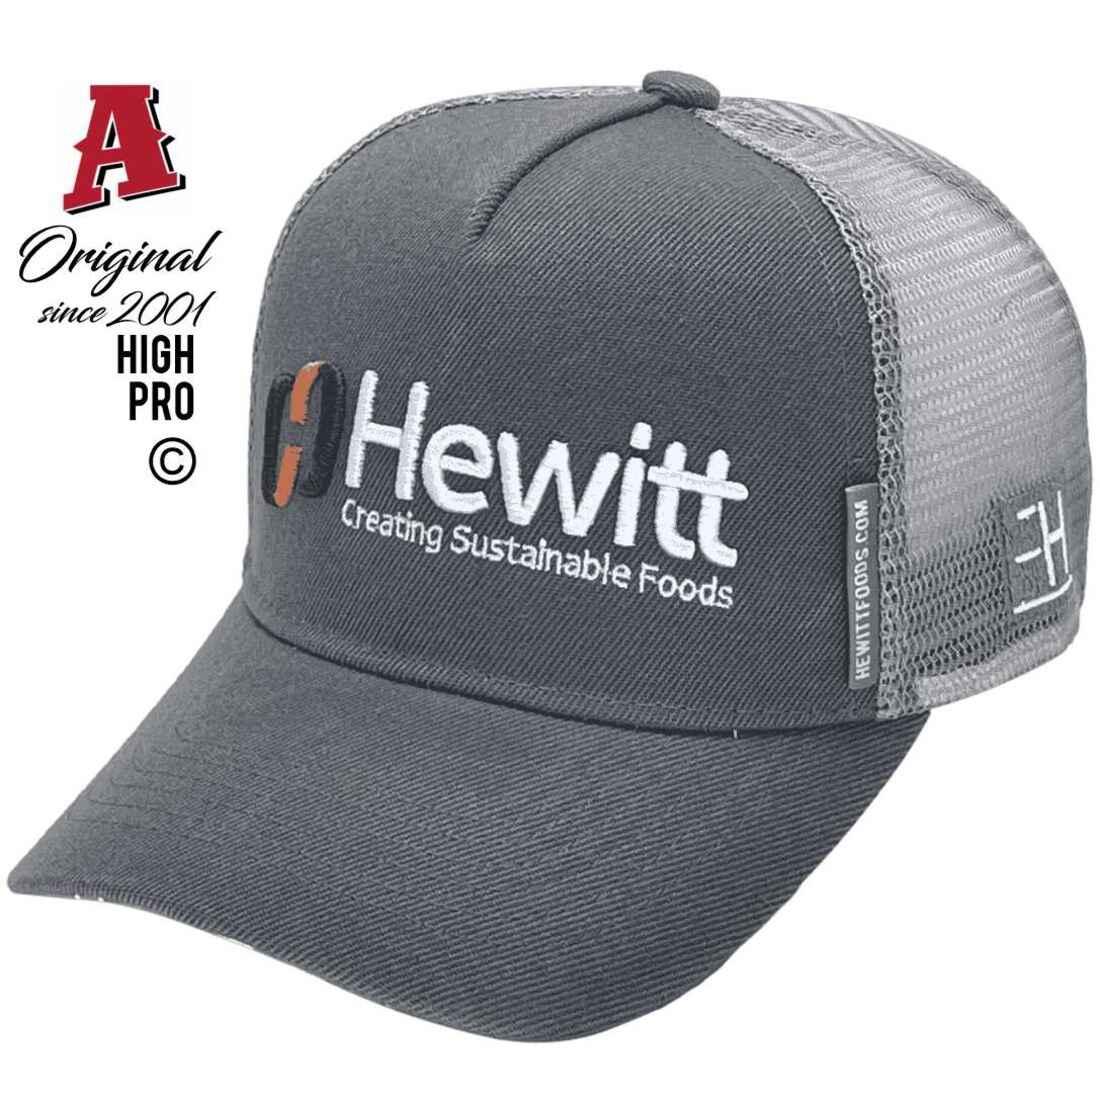 Hewitt Creating Sustainable Foods Brisbane Qld Basic Aussie Trucker Hats with Australian HeadFit Crown Snapback Silver Grey